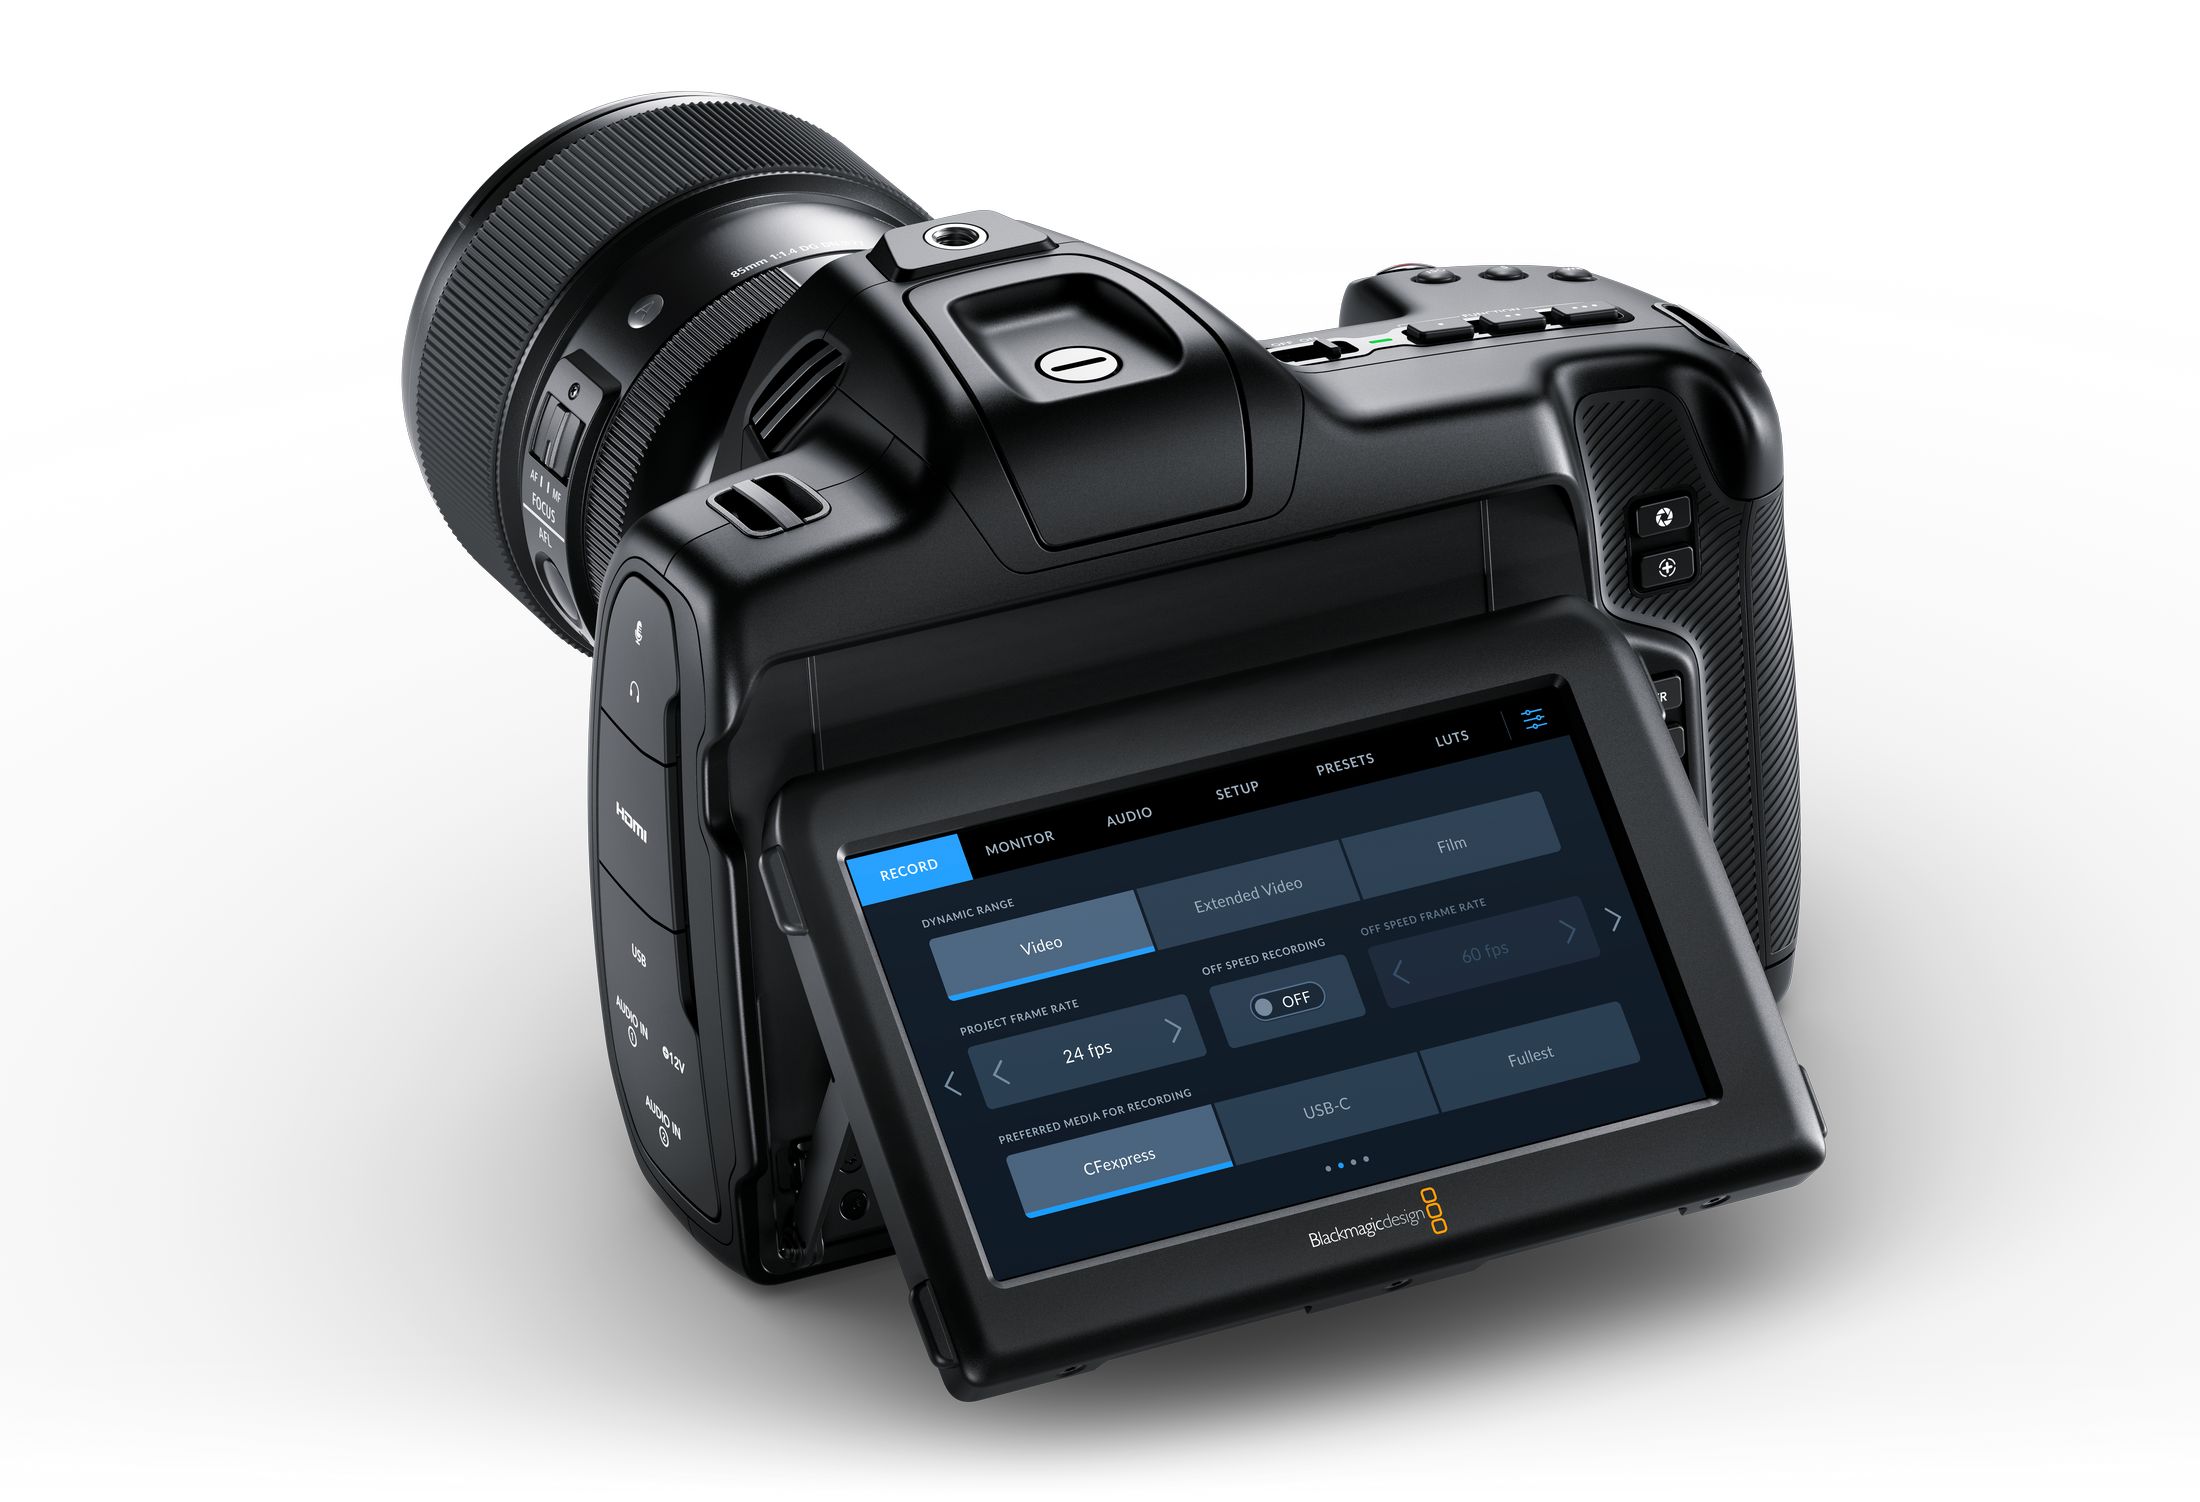 Blackmagic Design unveils its first full-frame model, the Cinema Camera 6K